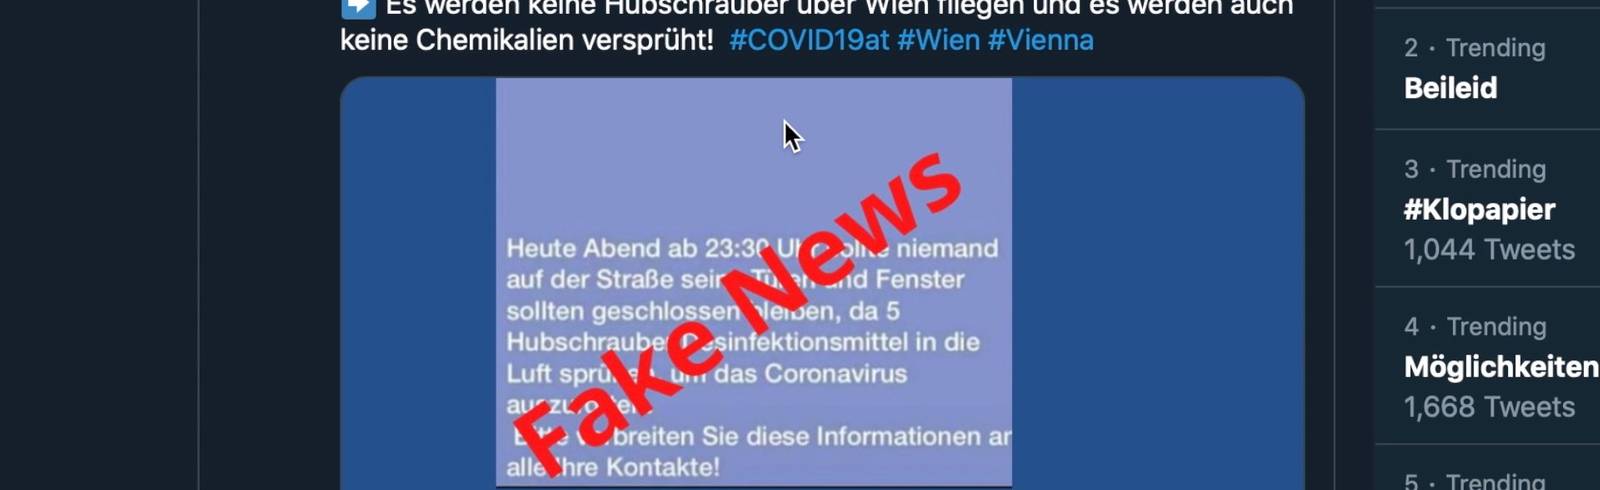 Corona-Virus: Fake News nehmen zu